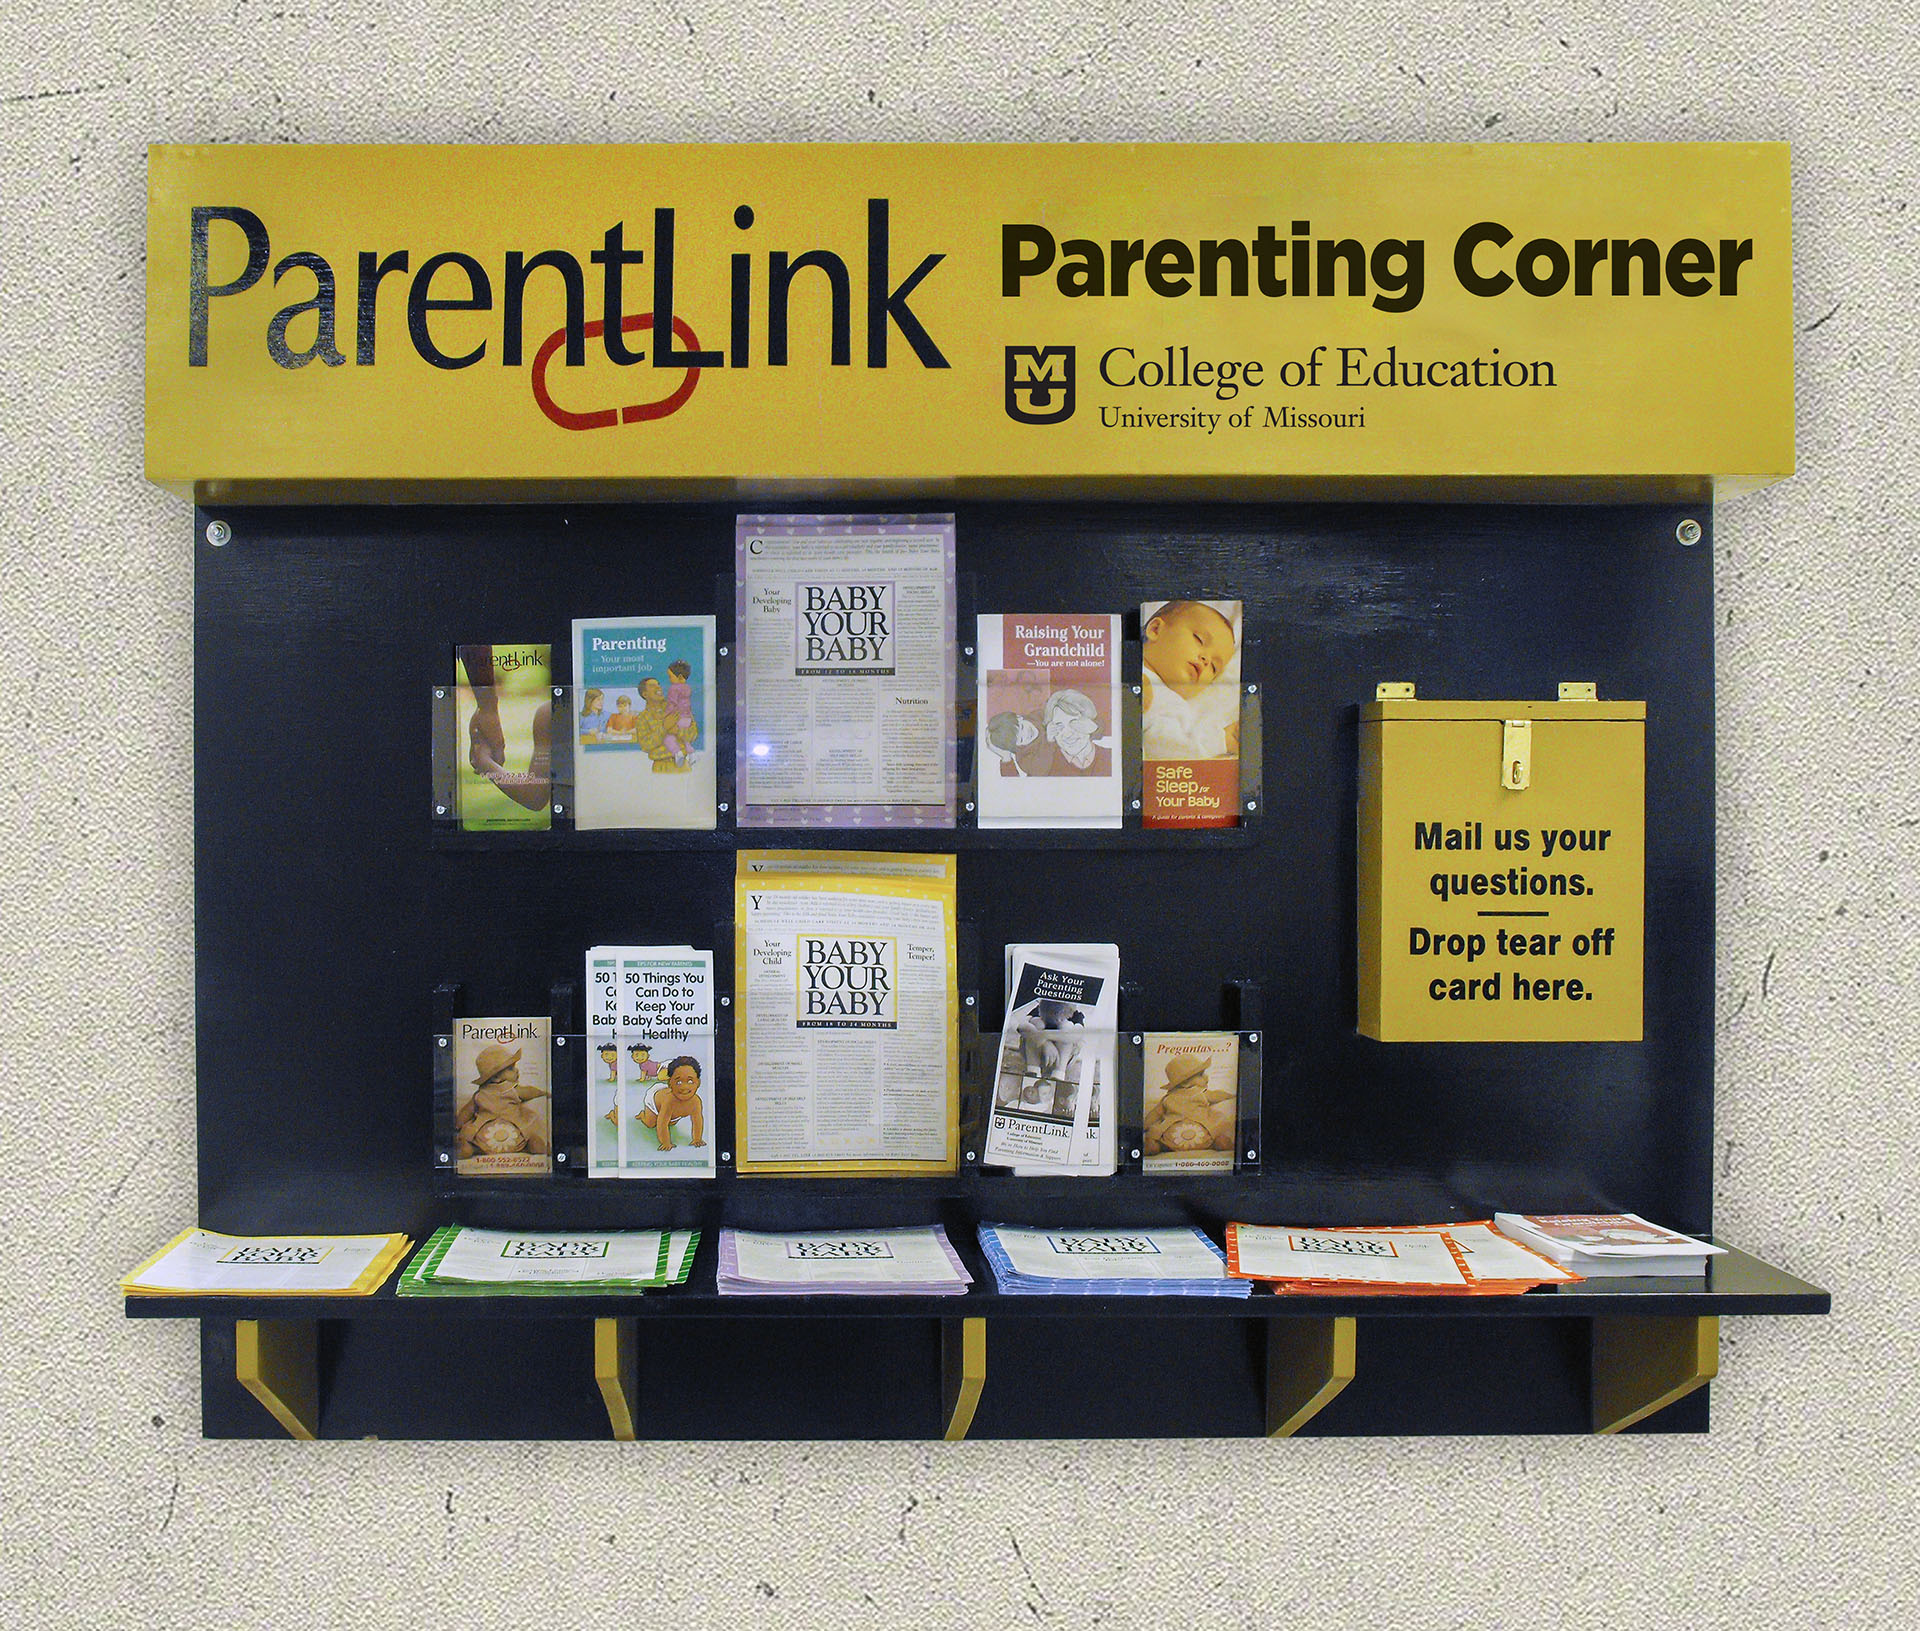 ParentLink Parenting Corners, Services for Incarcerated Parents